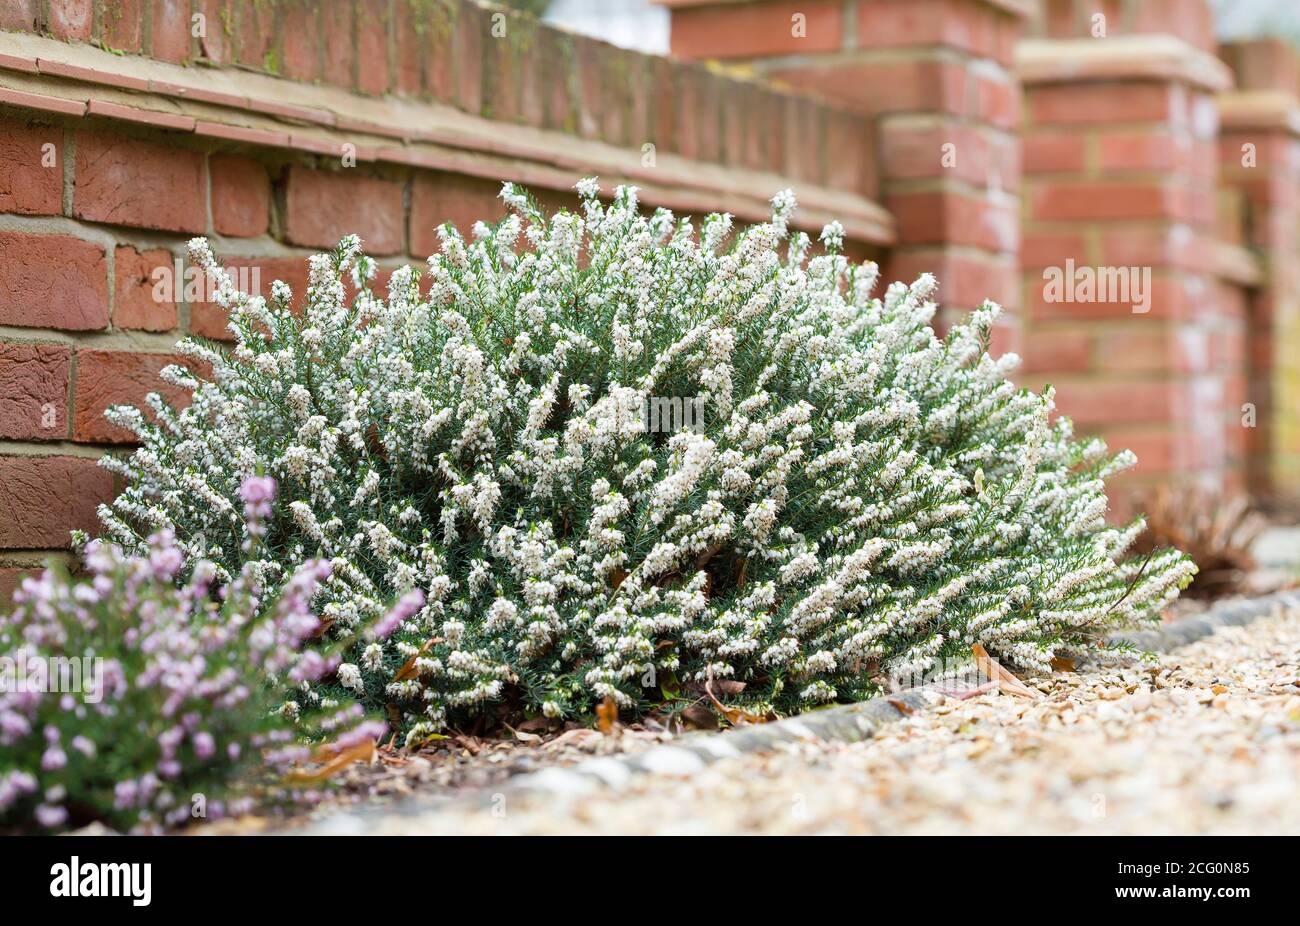 Heathers, winter flowering heather plants, White Perfection, erica x darleyensis, in a garden flowerbed, UK Stock Photo